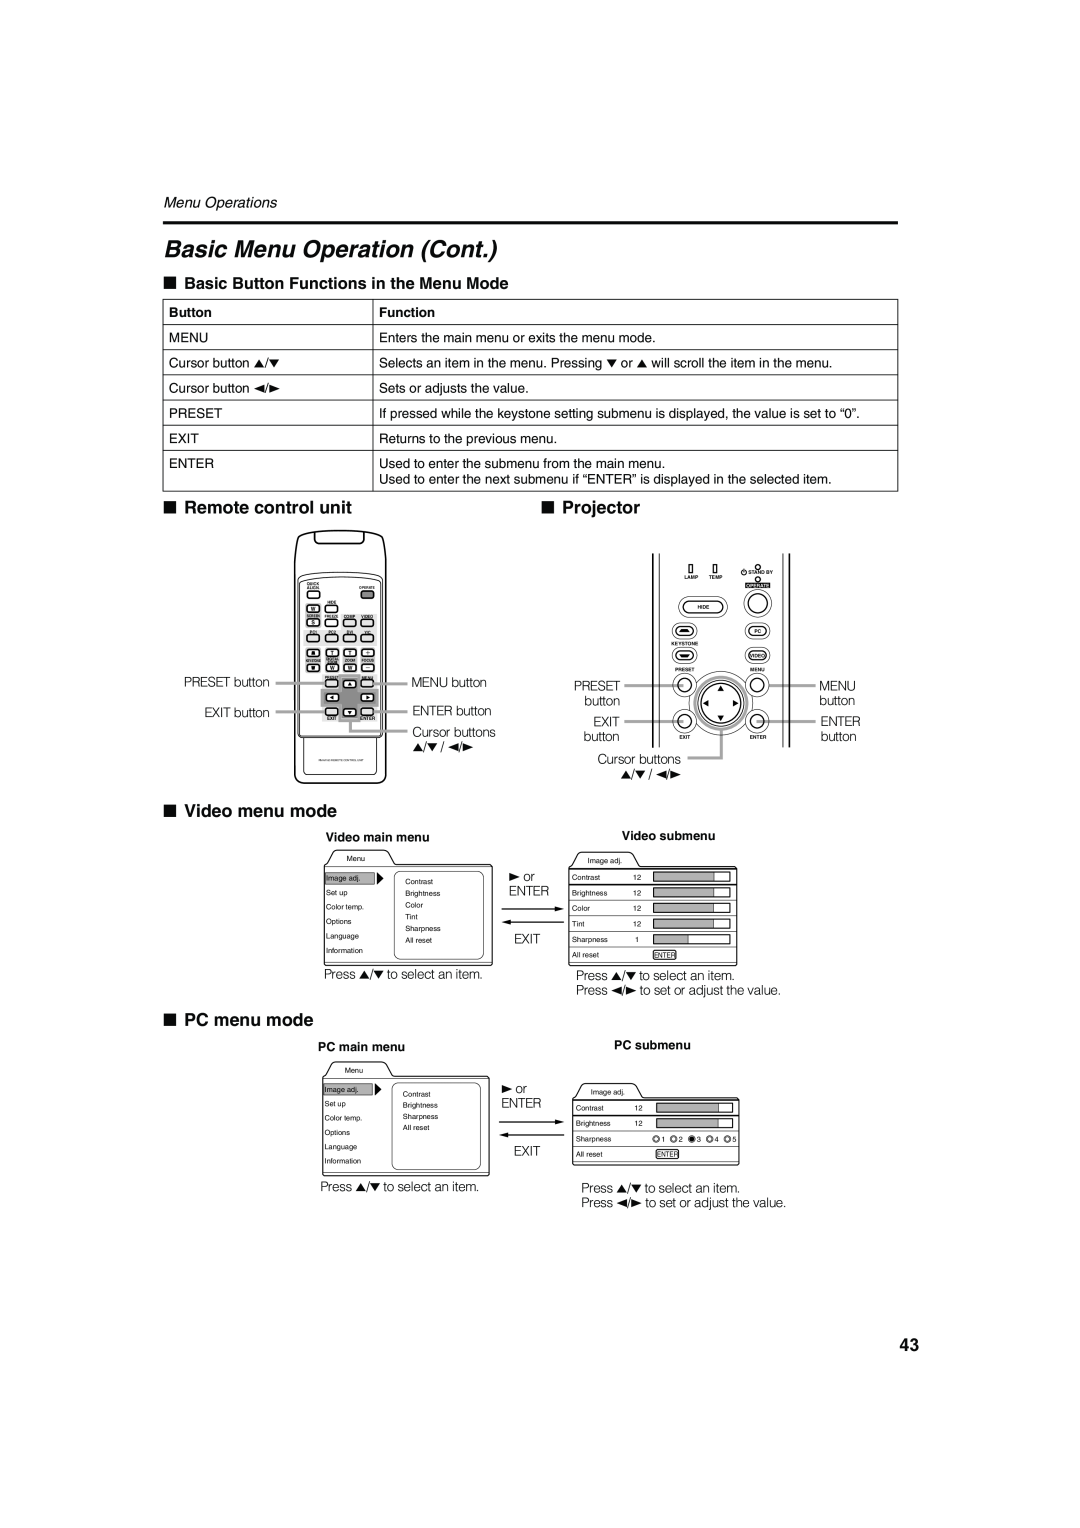 Meridian Audio FDP-DILA2 warranty Remote control unit, Projector, Video menu mode, PC menu mode, Menu Operations 